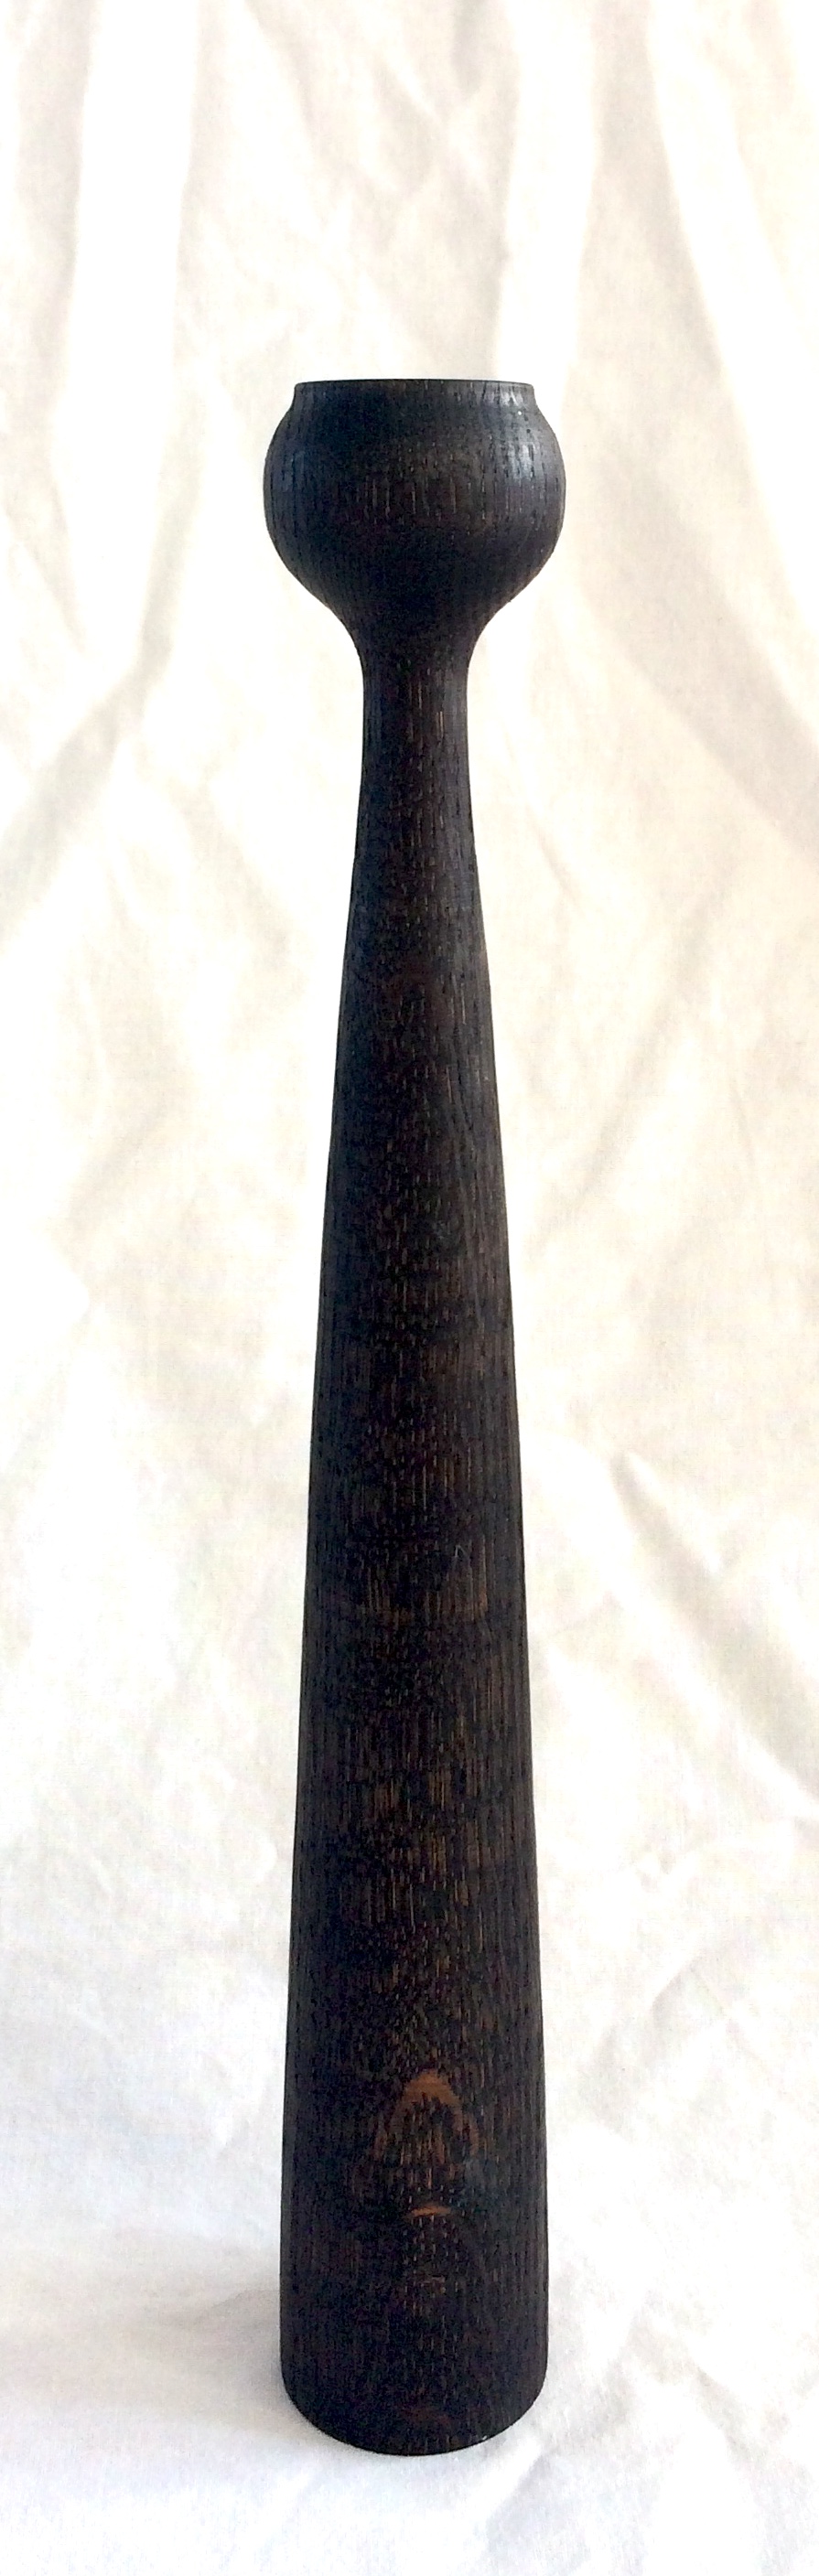 Applicata Blossom Lysestage - Tulip - Sort - 33,5 cm. - Lysestager - Igen-brugsen